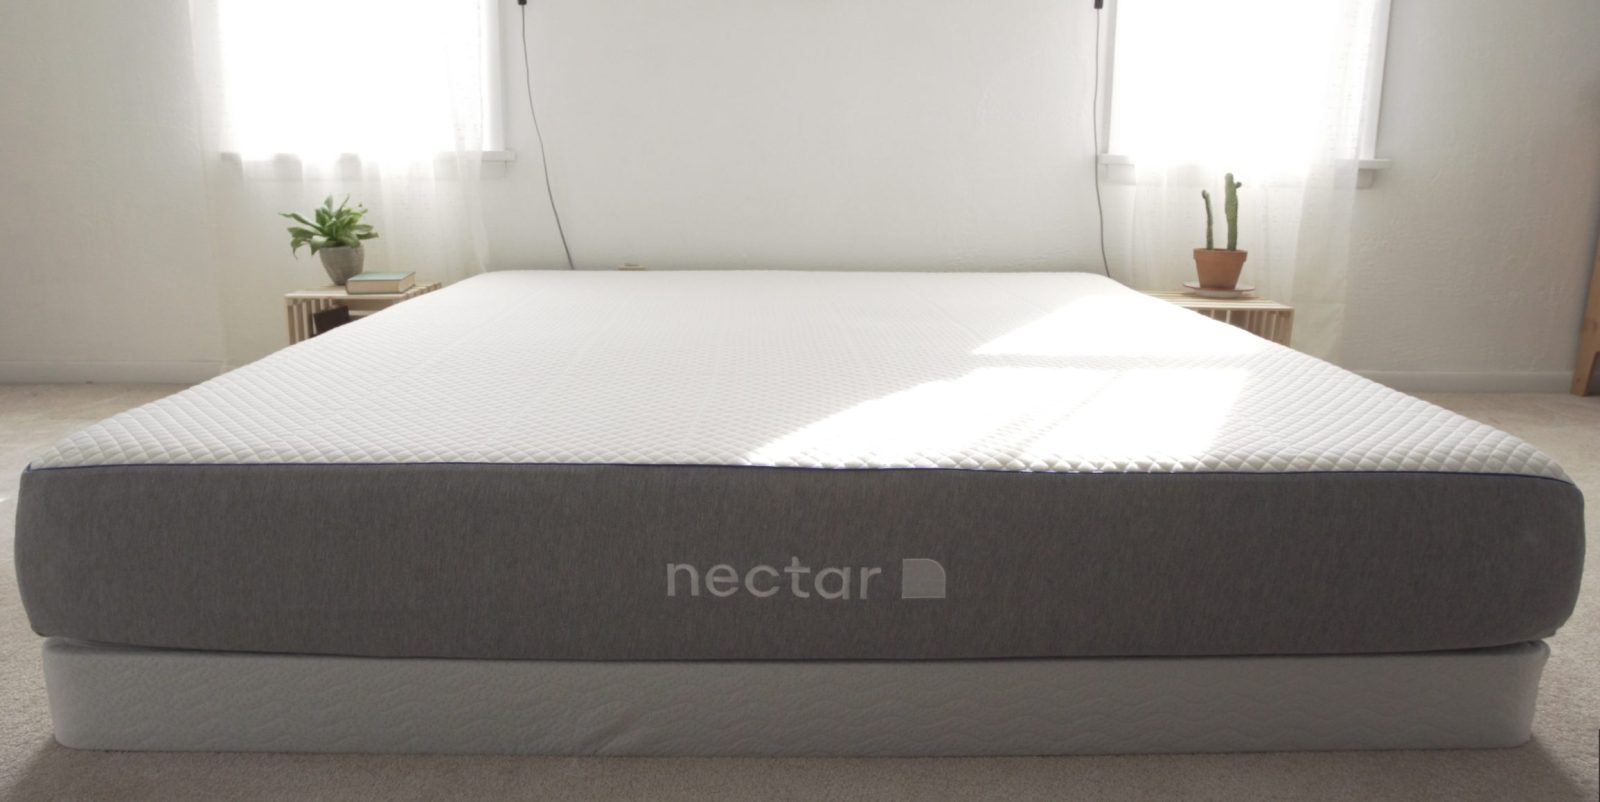 can i cut the nectar mattress